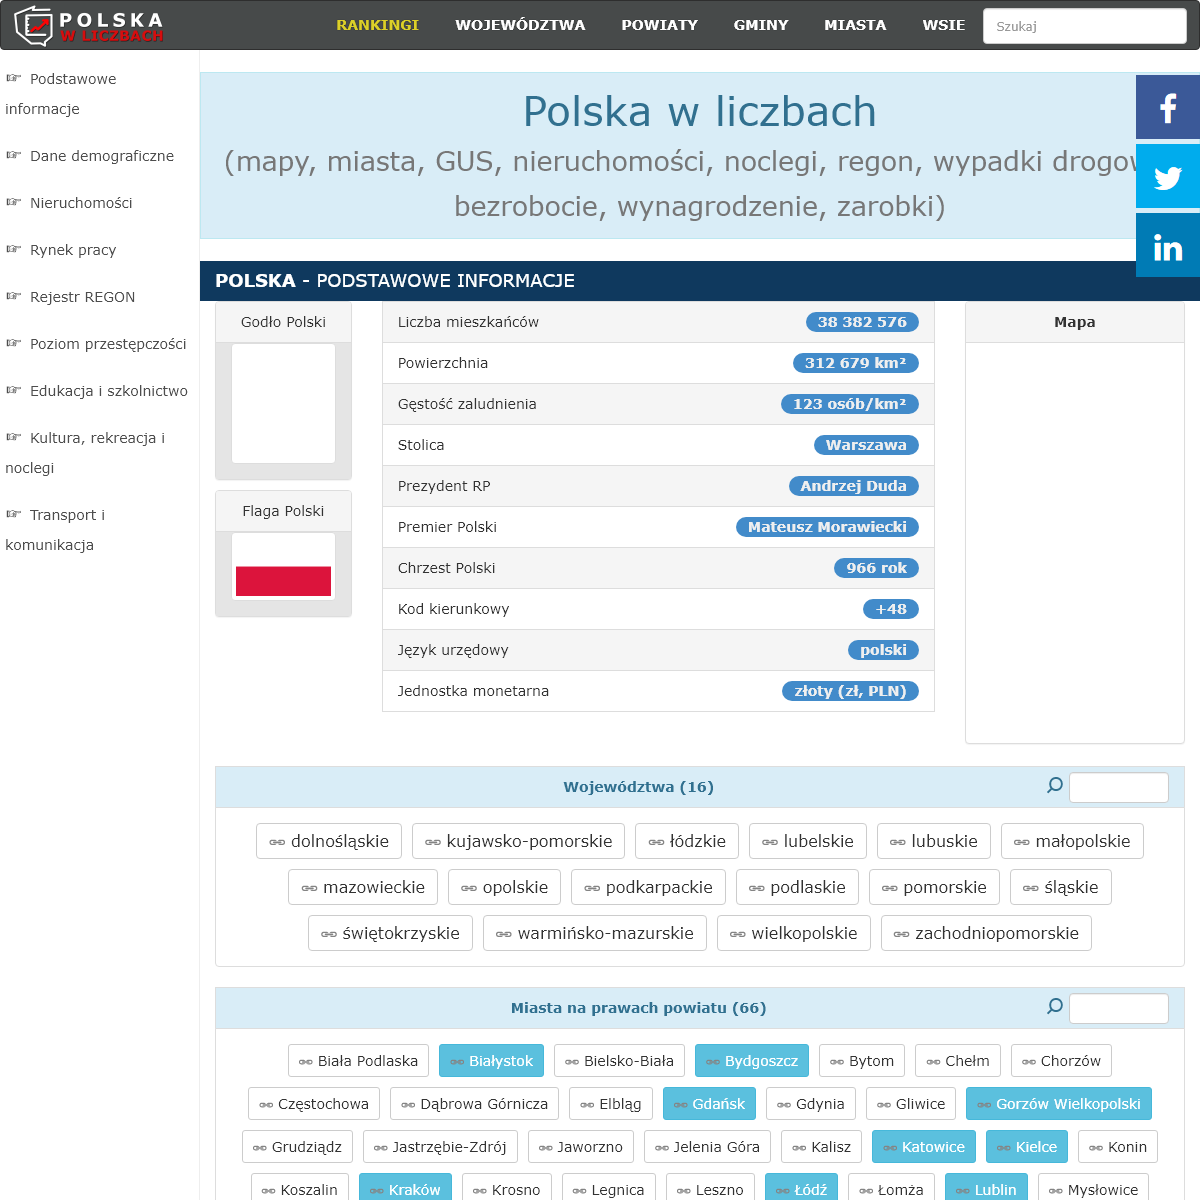 A complete backup of polskawliczbach.pl